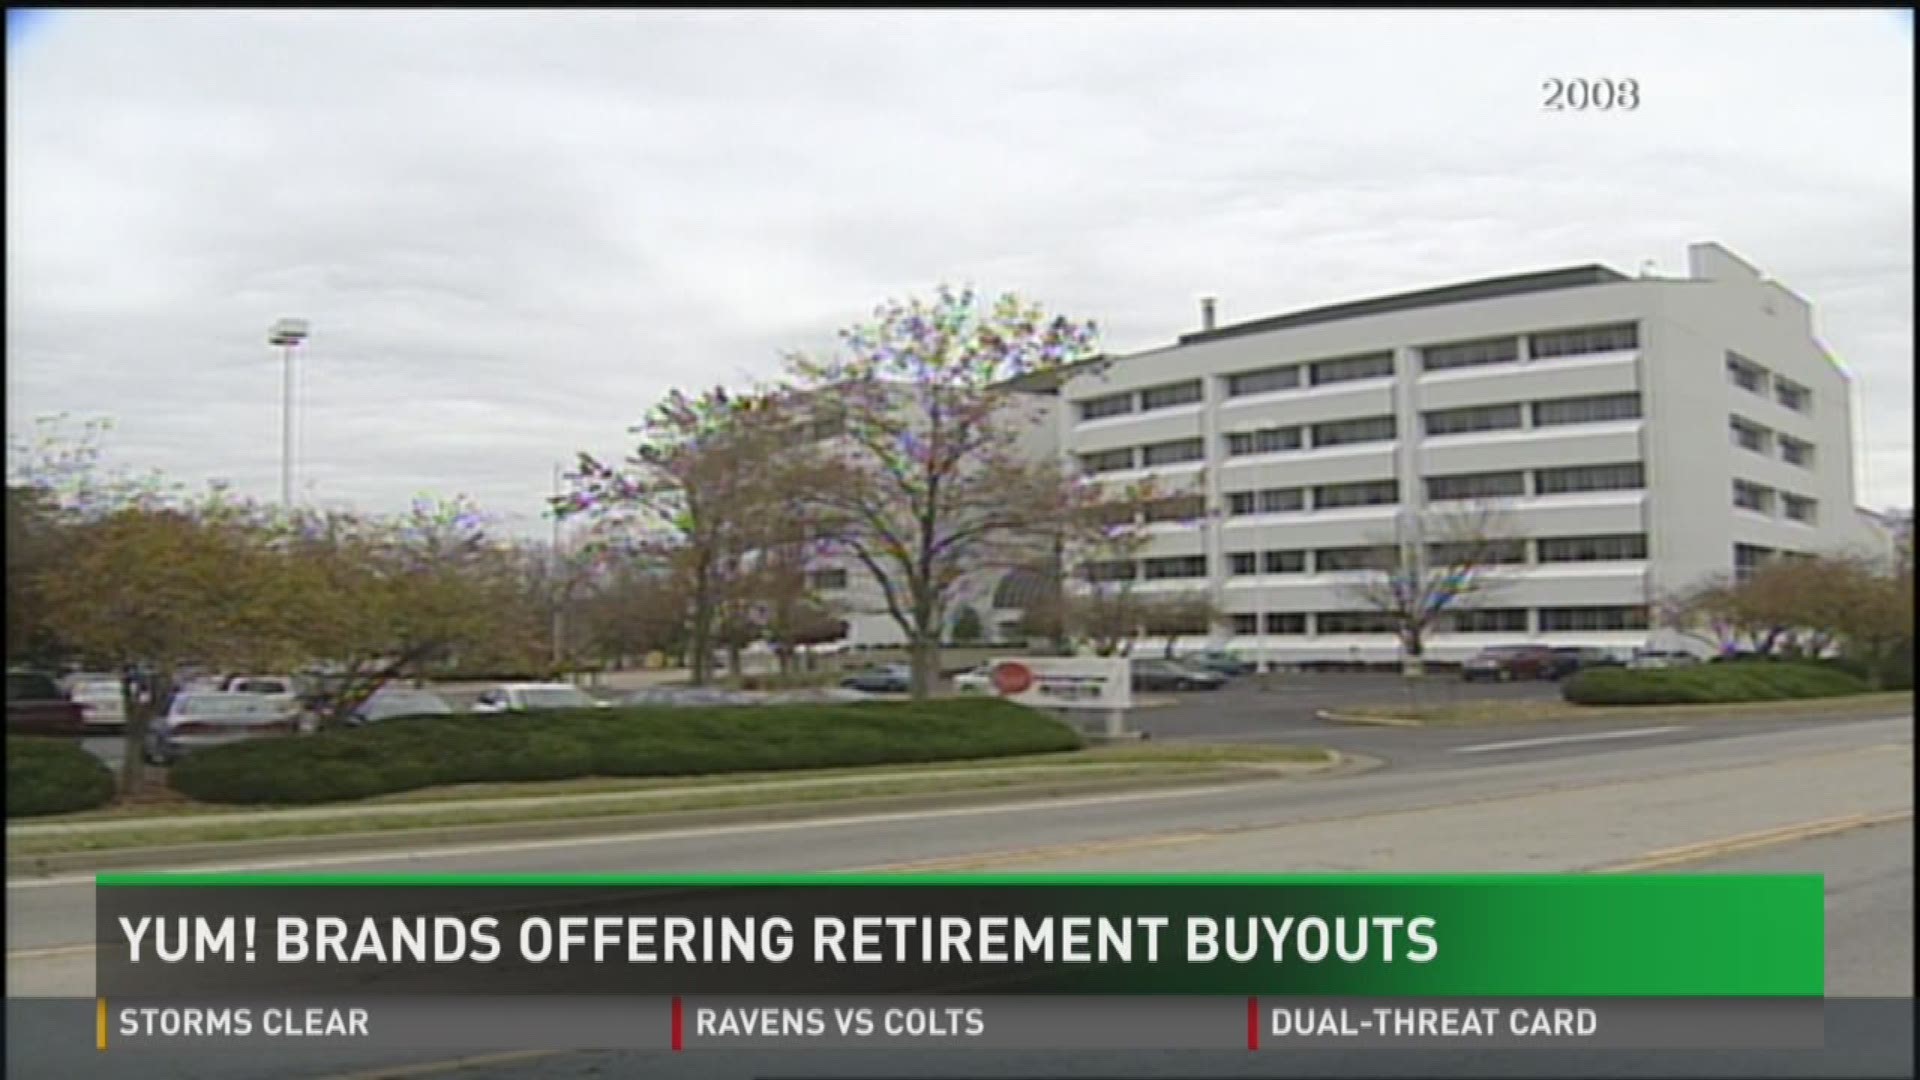 Yum Brands offering voluntary retirement buyouts